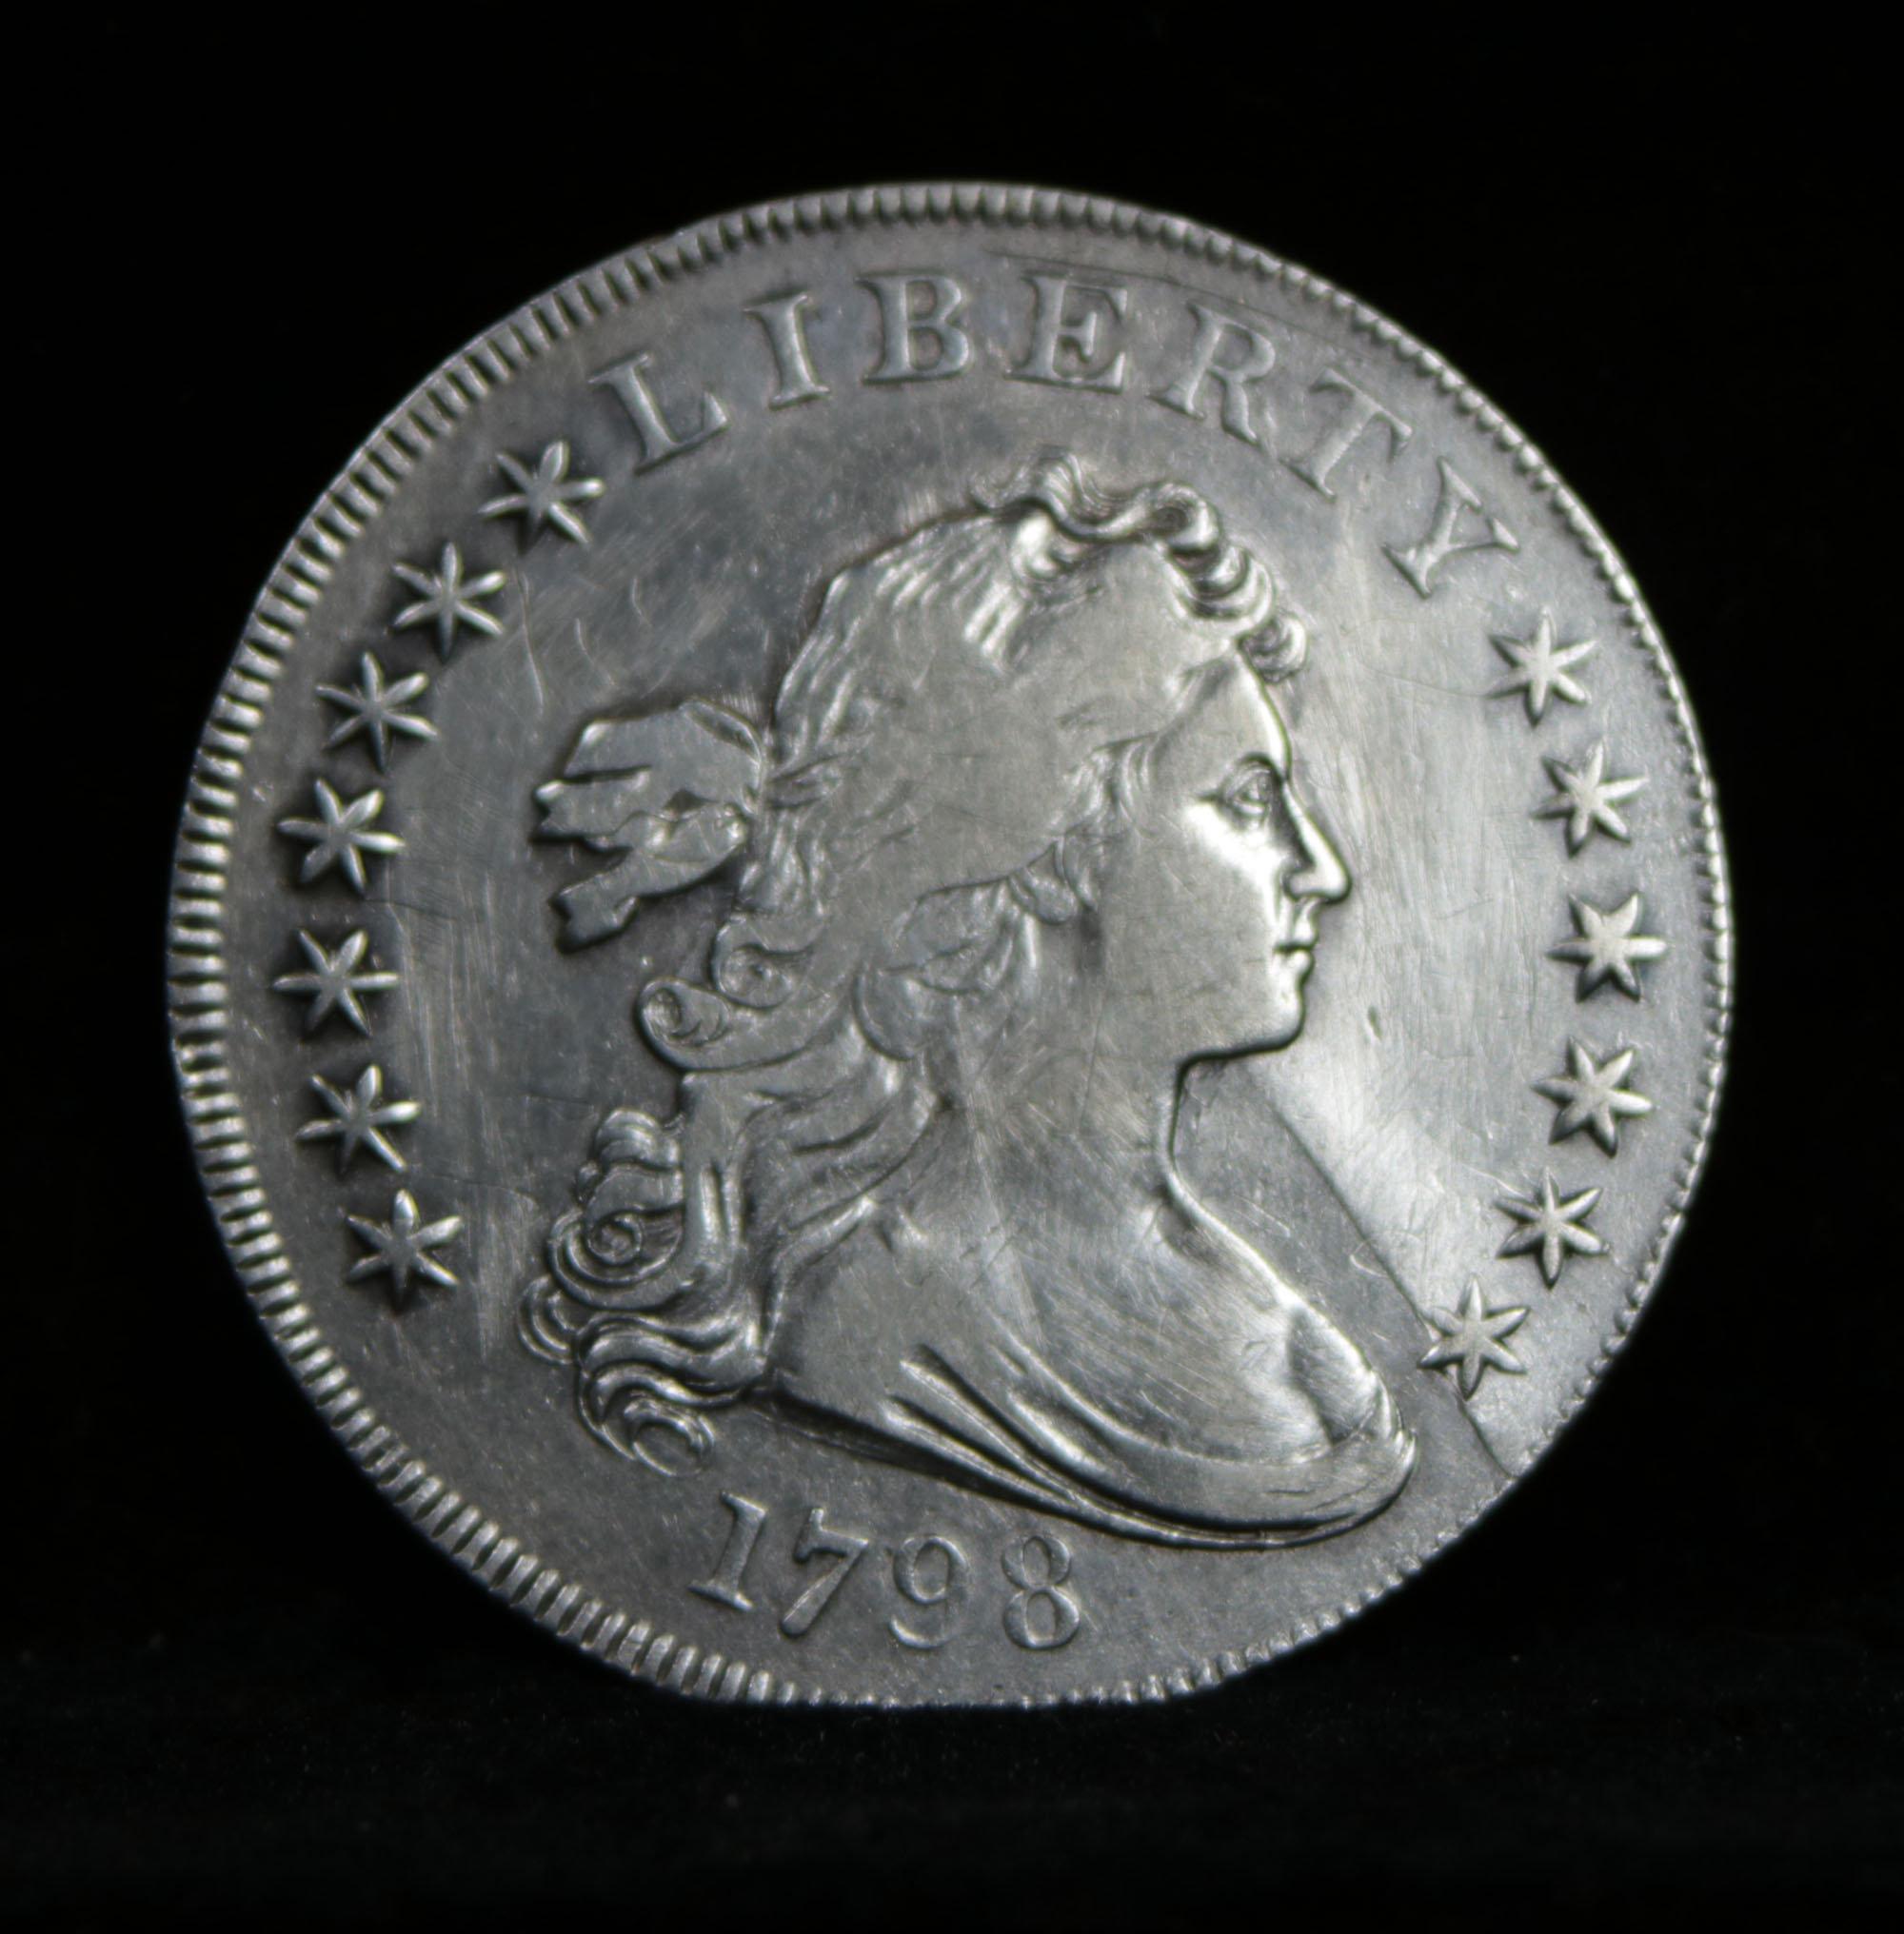 ***Auction Highlight*** 1798 Heraldic Eagle Draped Bust Dollar $1 Graded vf++ by USCG (fc)